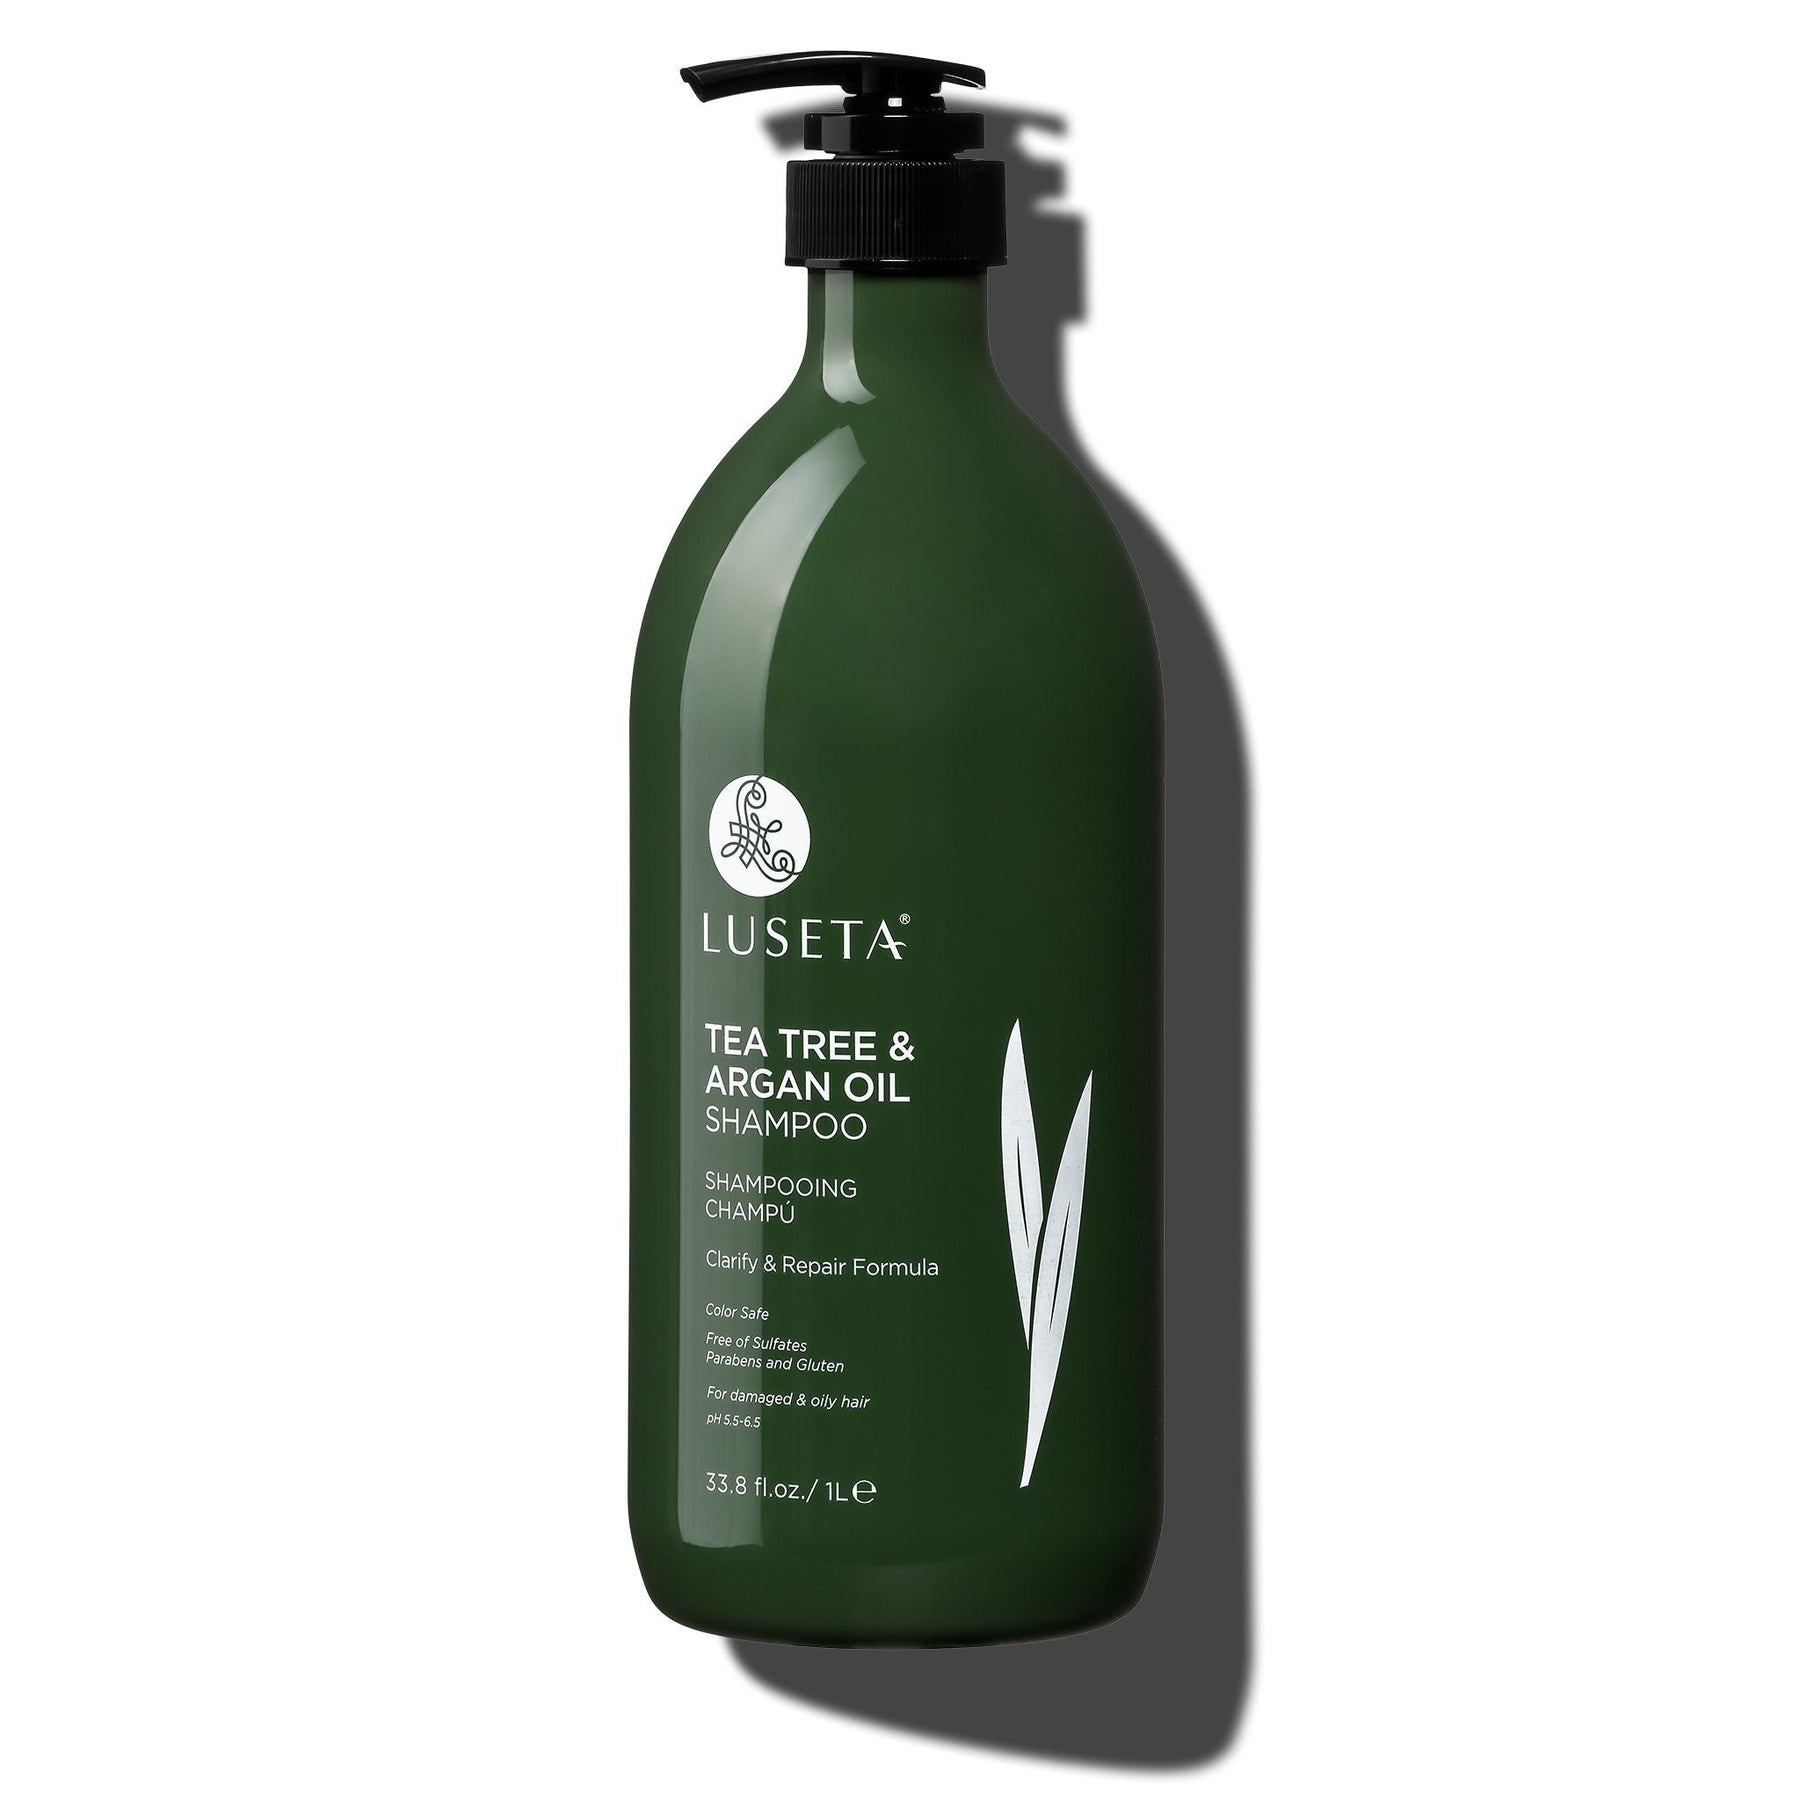 Tea Tree & Argan Oil Shampoo - 33.8oz - by Luseta Beauty |ProCare Outlet|